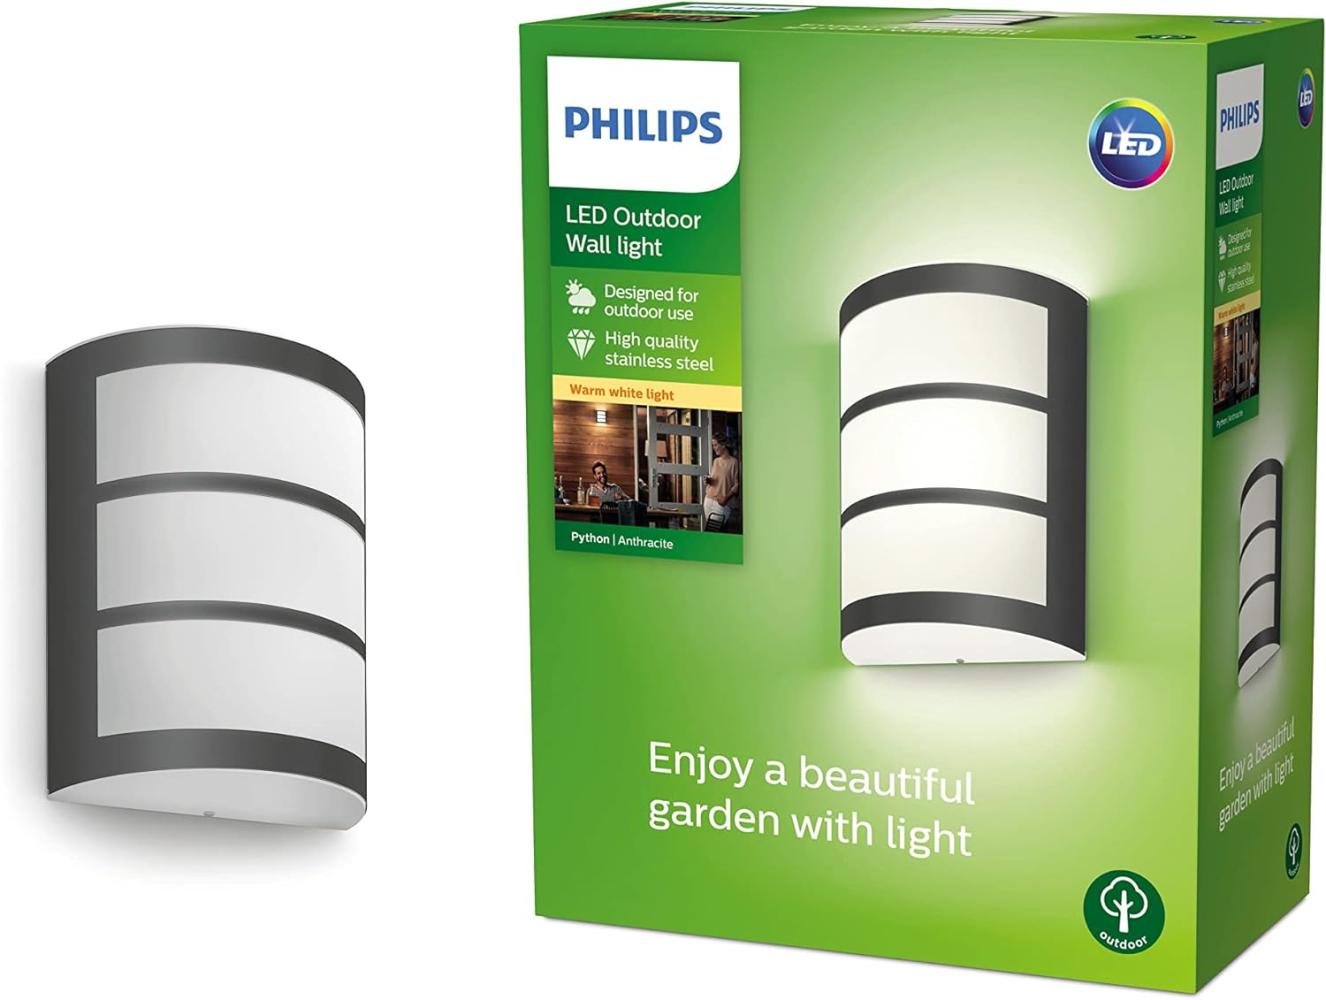 Philips Python Wall 2700K Anthrazit- Bild 1